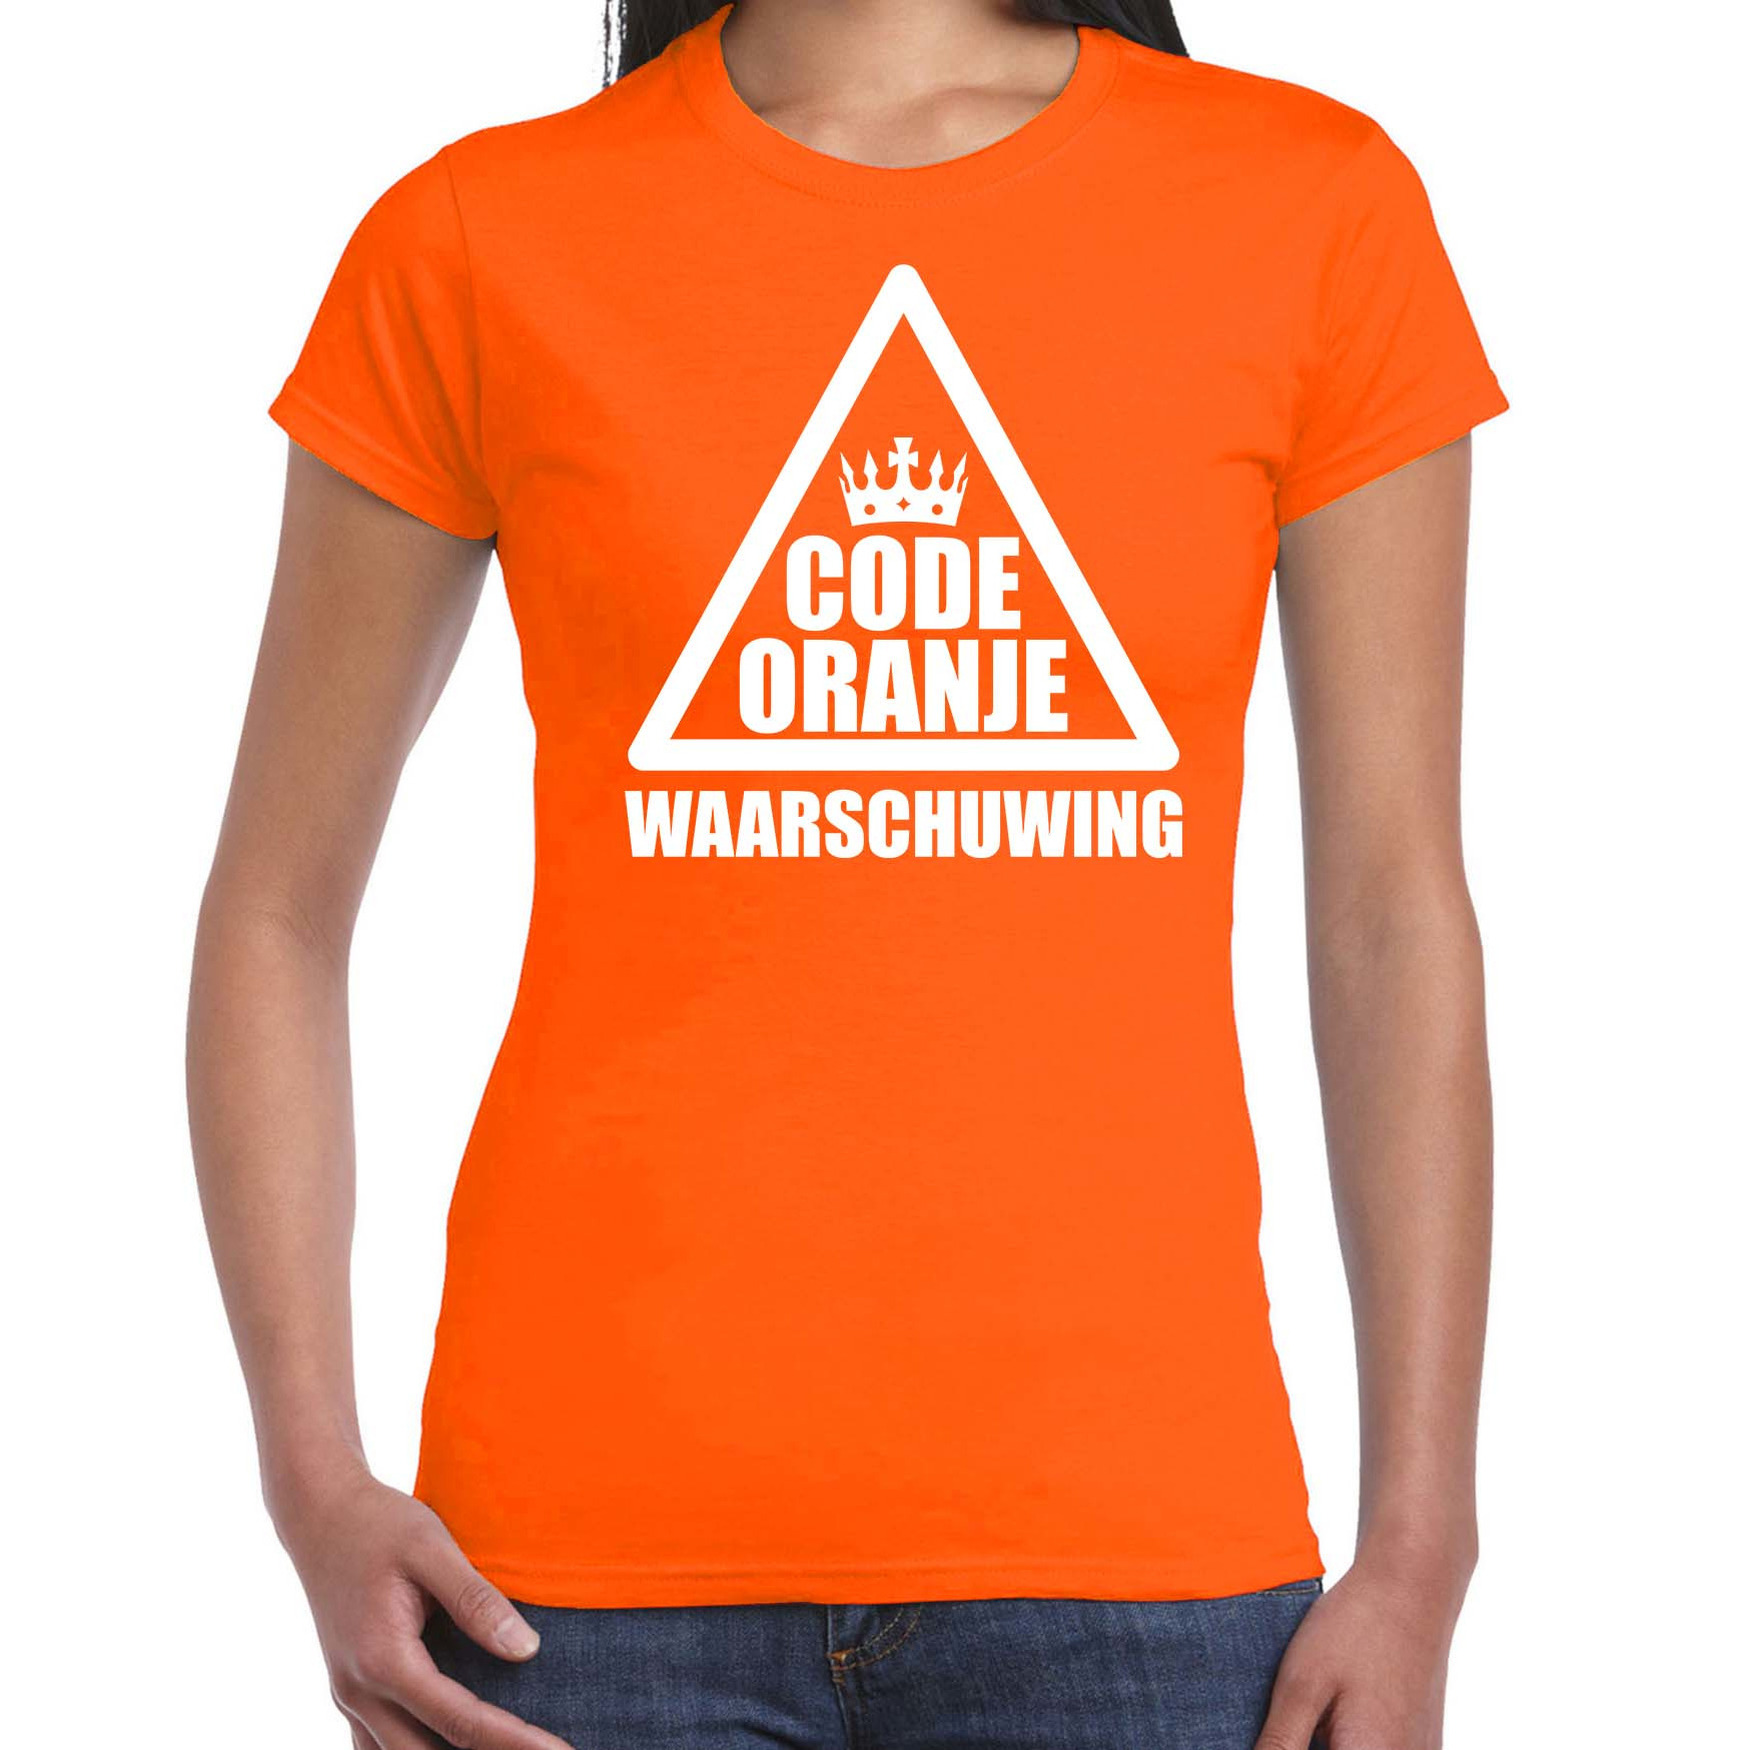 Code oranje waarschuwing t-shirt oranje voor dames Koningsdag-EK-WK shirts